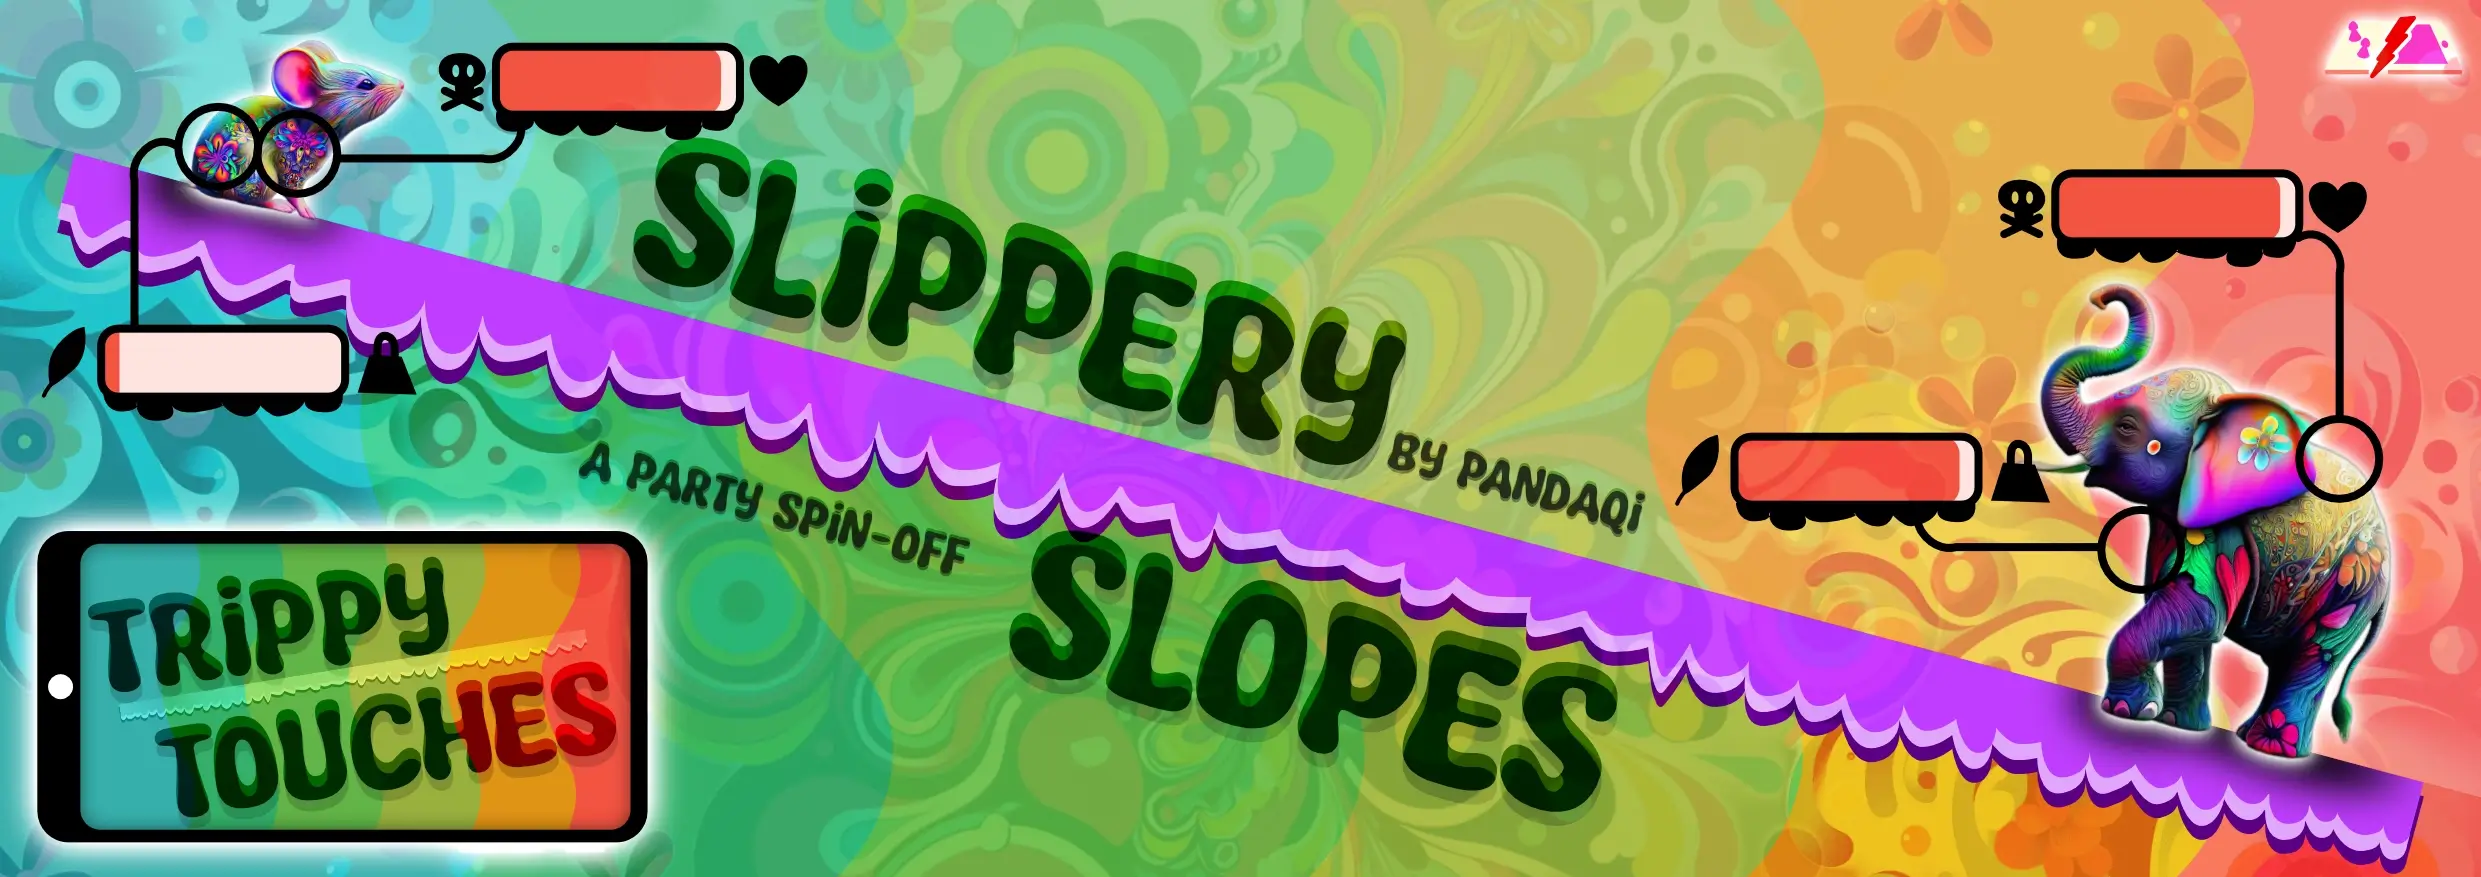 Slippery slopes trippy touches header